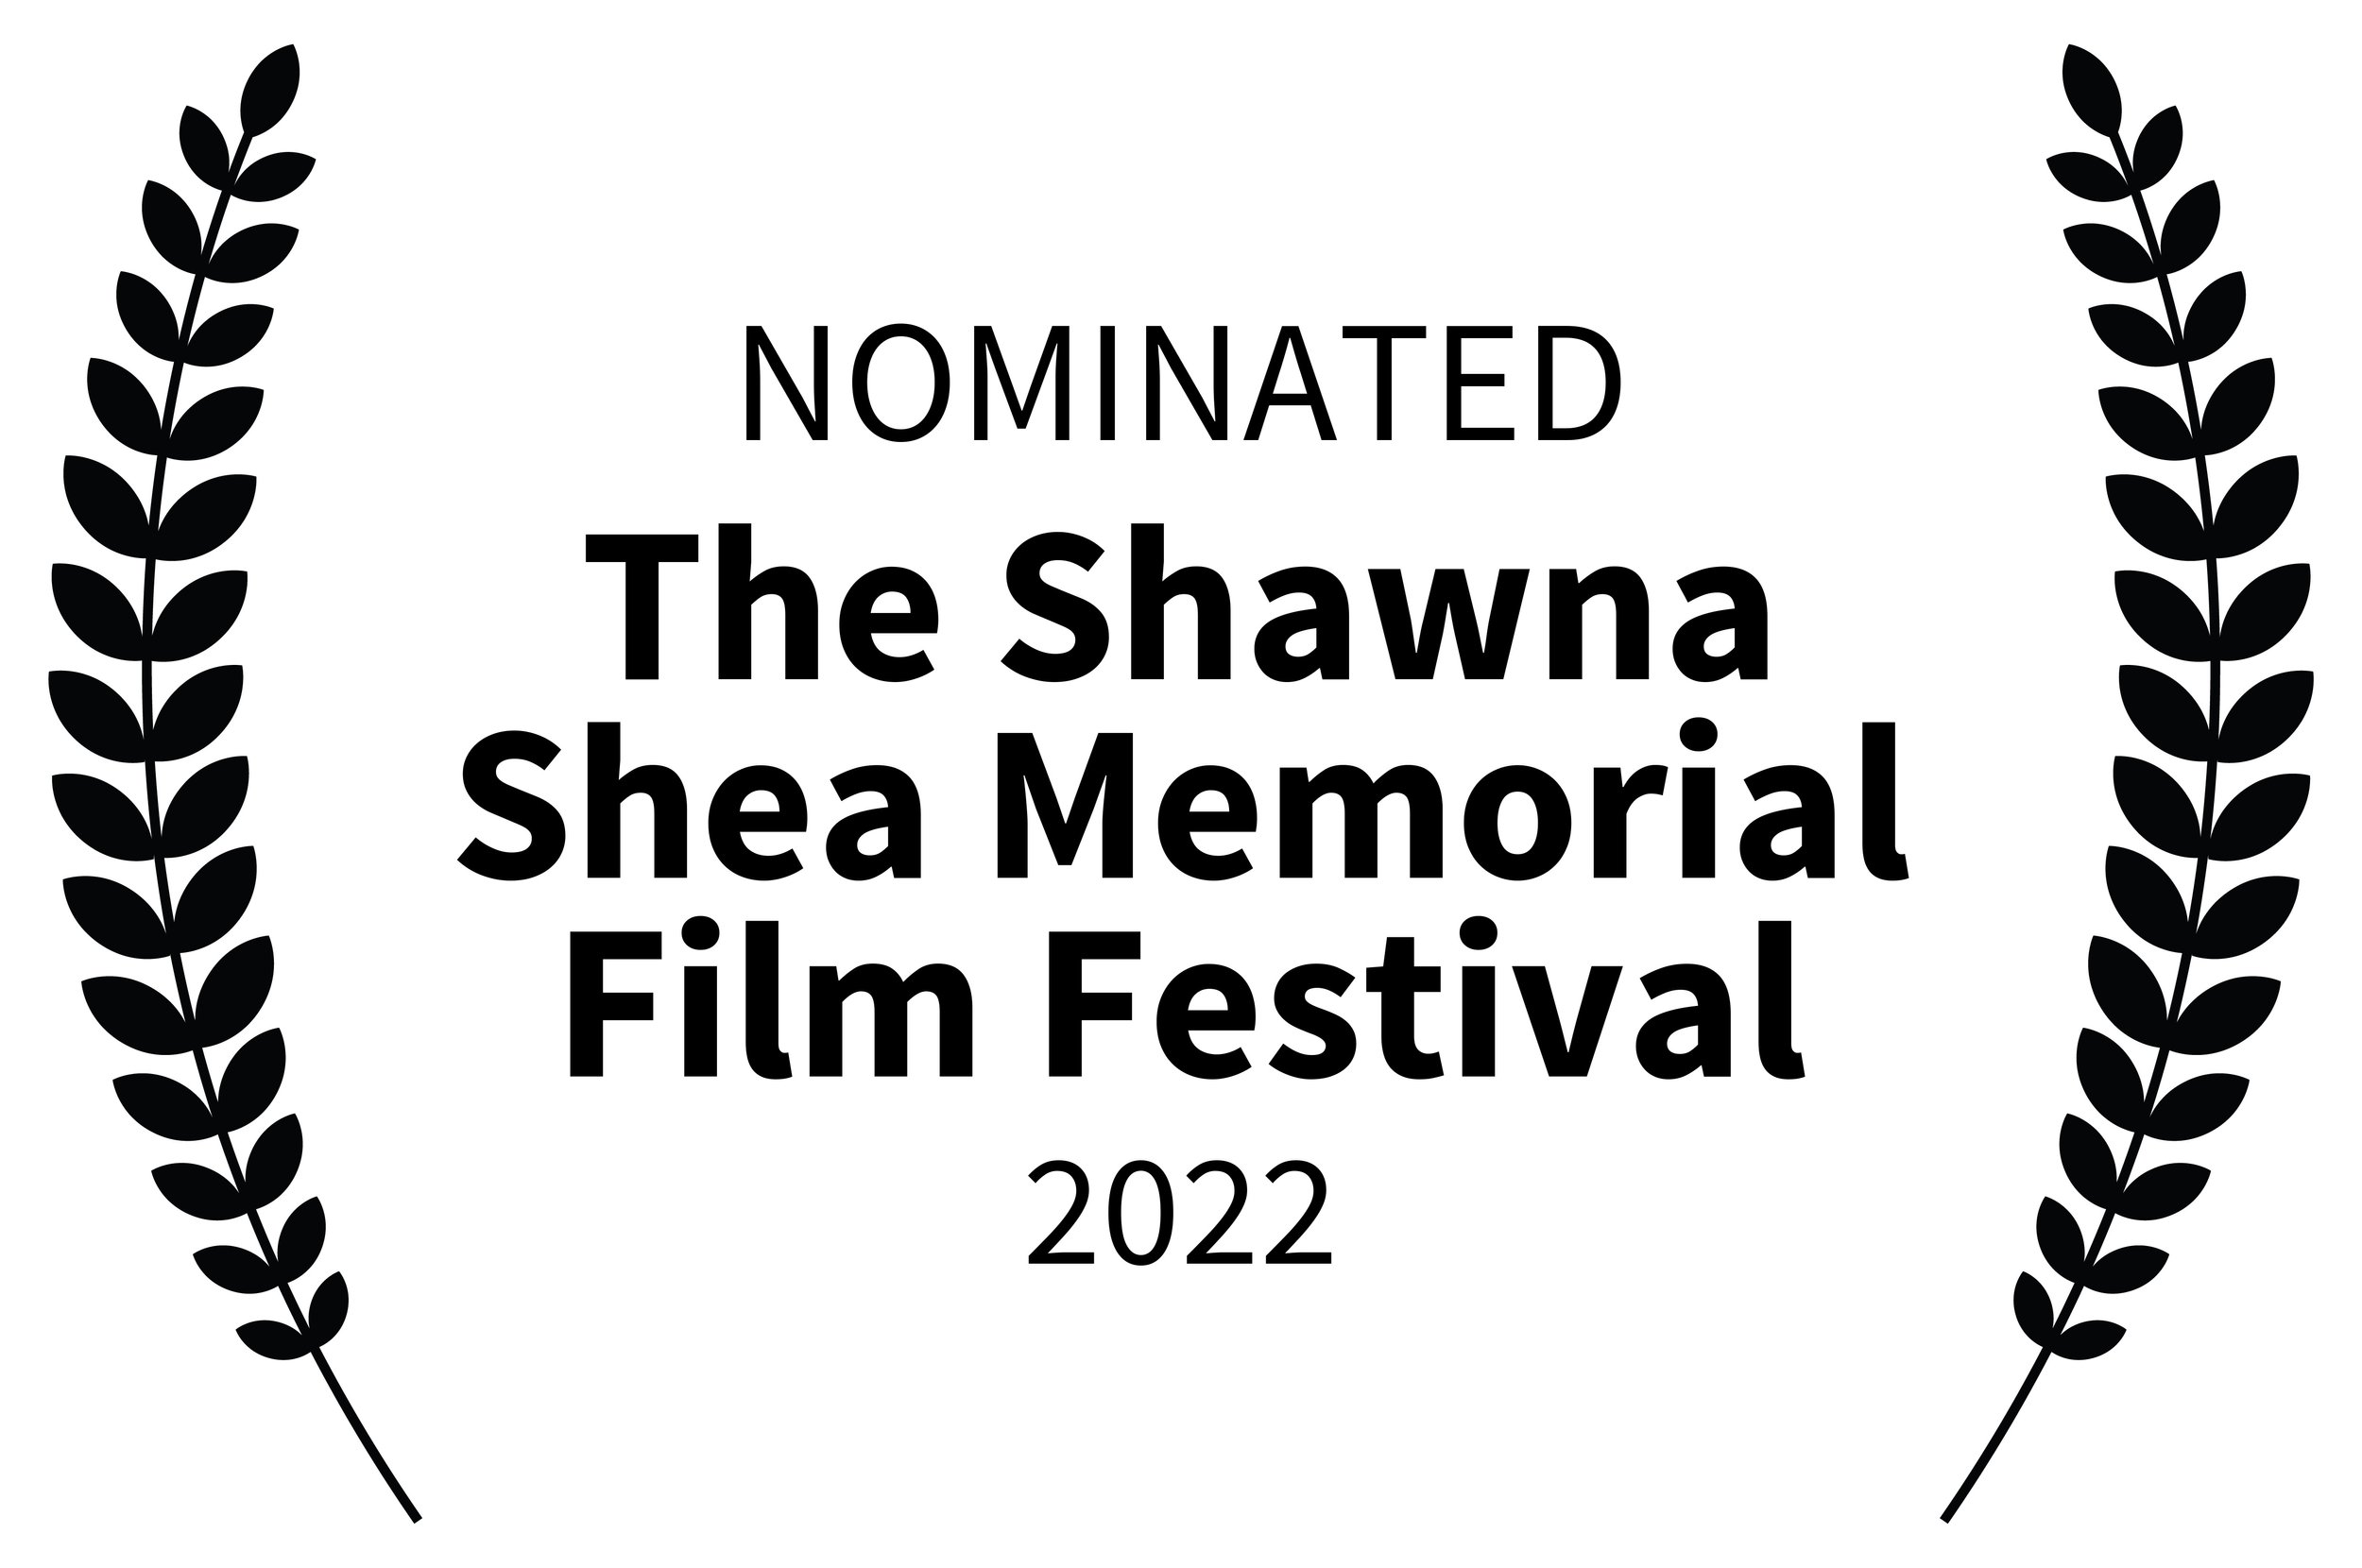 NOMINATED-TheShawnaSheaMemorialFilmFestival-2022_Penny.jpg